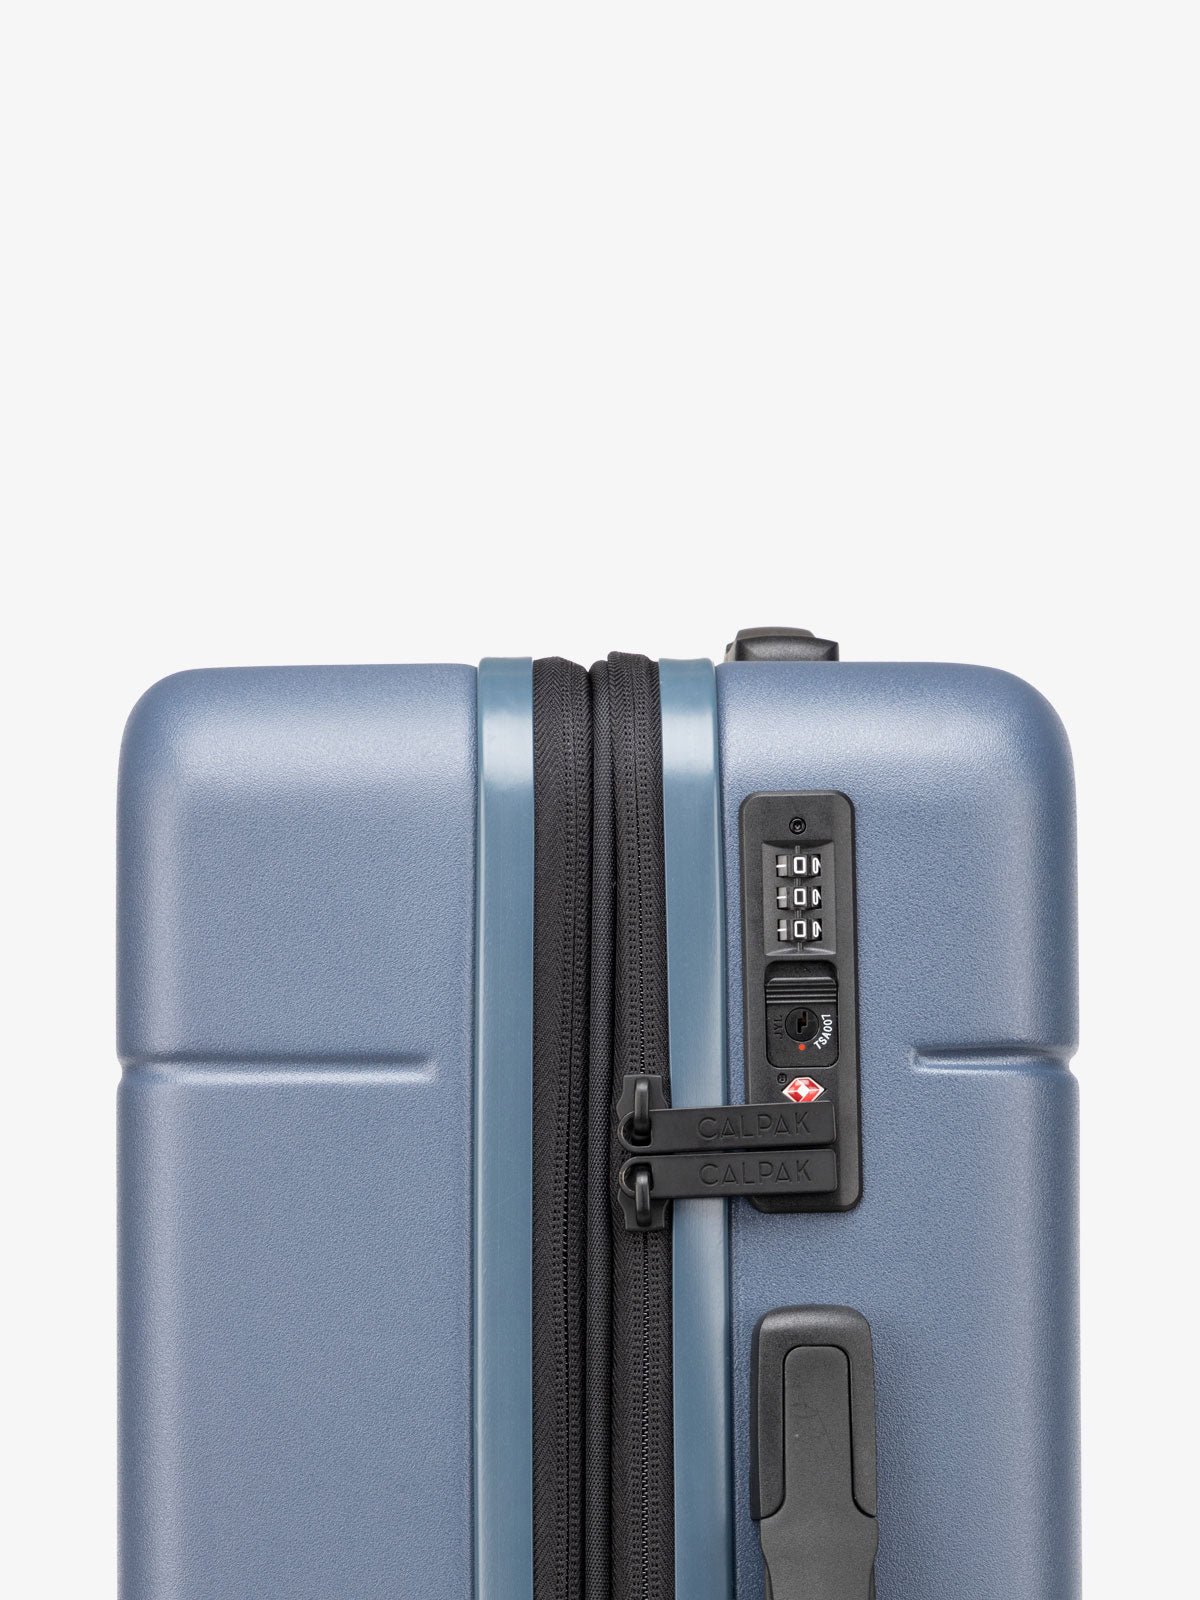 blue atlantic CALPAK Hue checked luggage with built in TSA lock